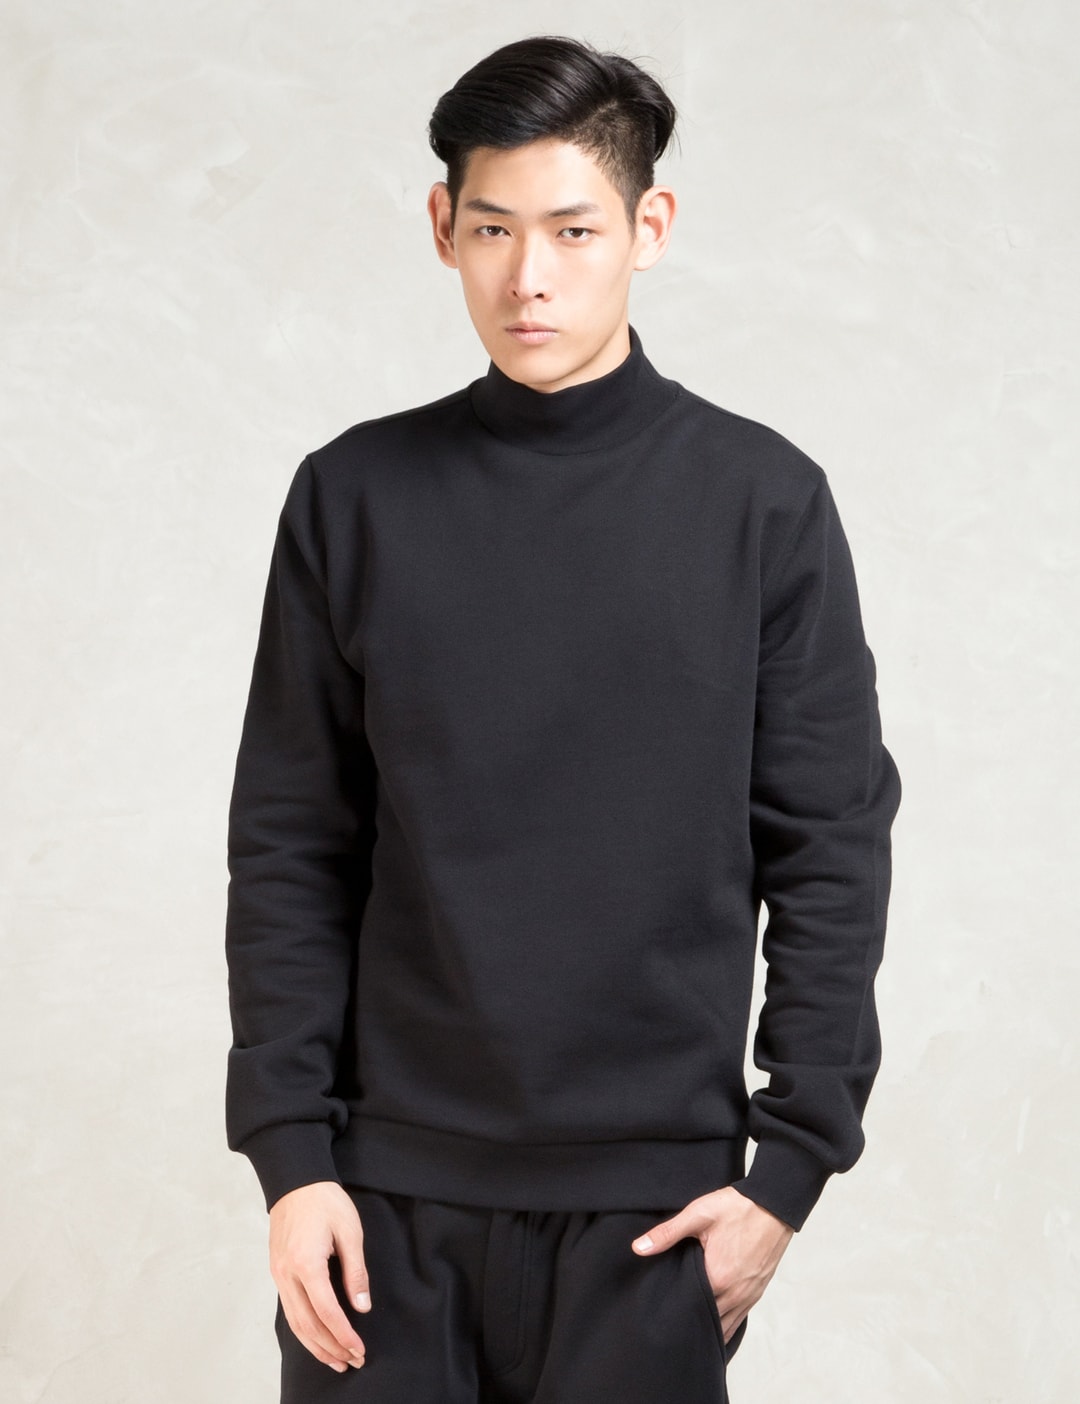 AMH - Black Turtleneck Sweatshirt | HBX - Globally Curated Fashion and ...